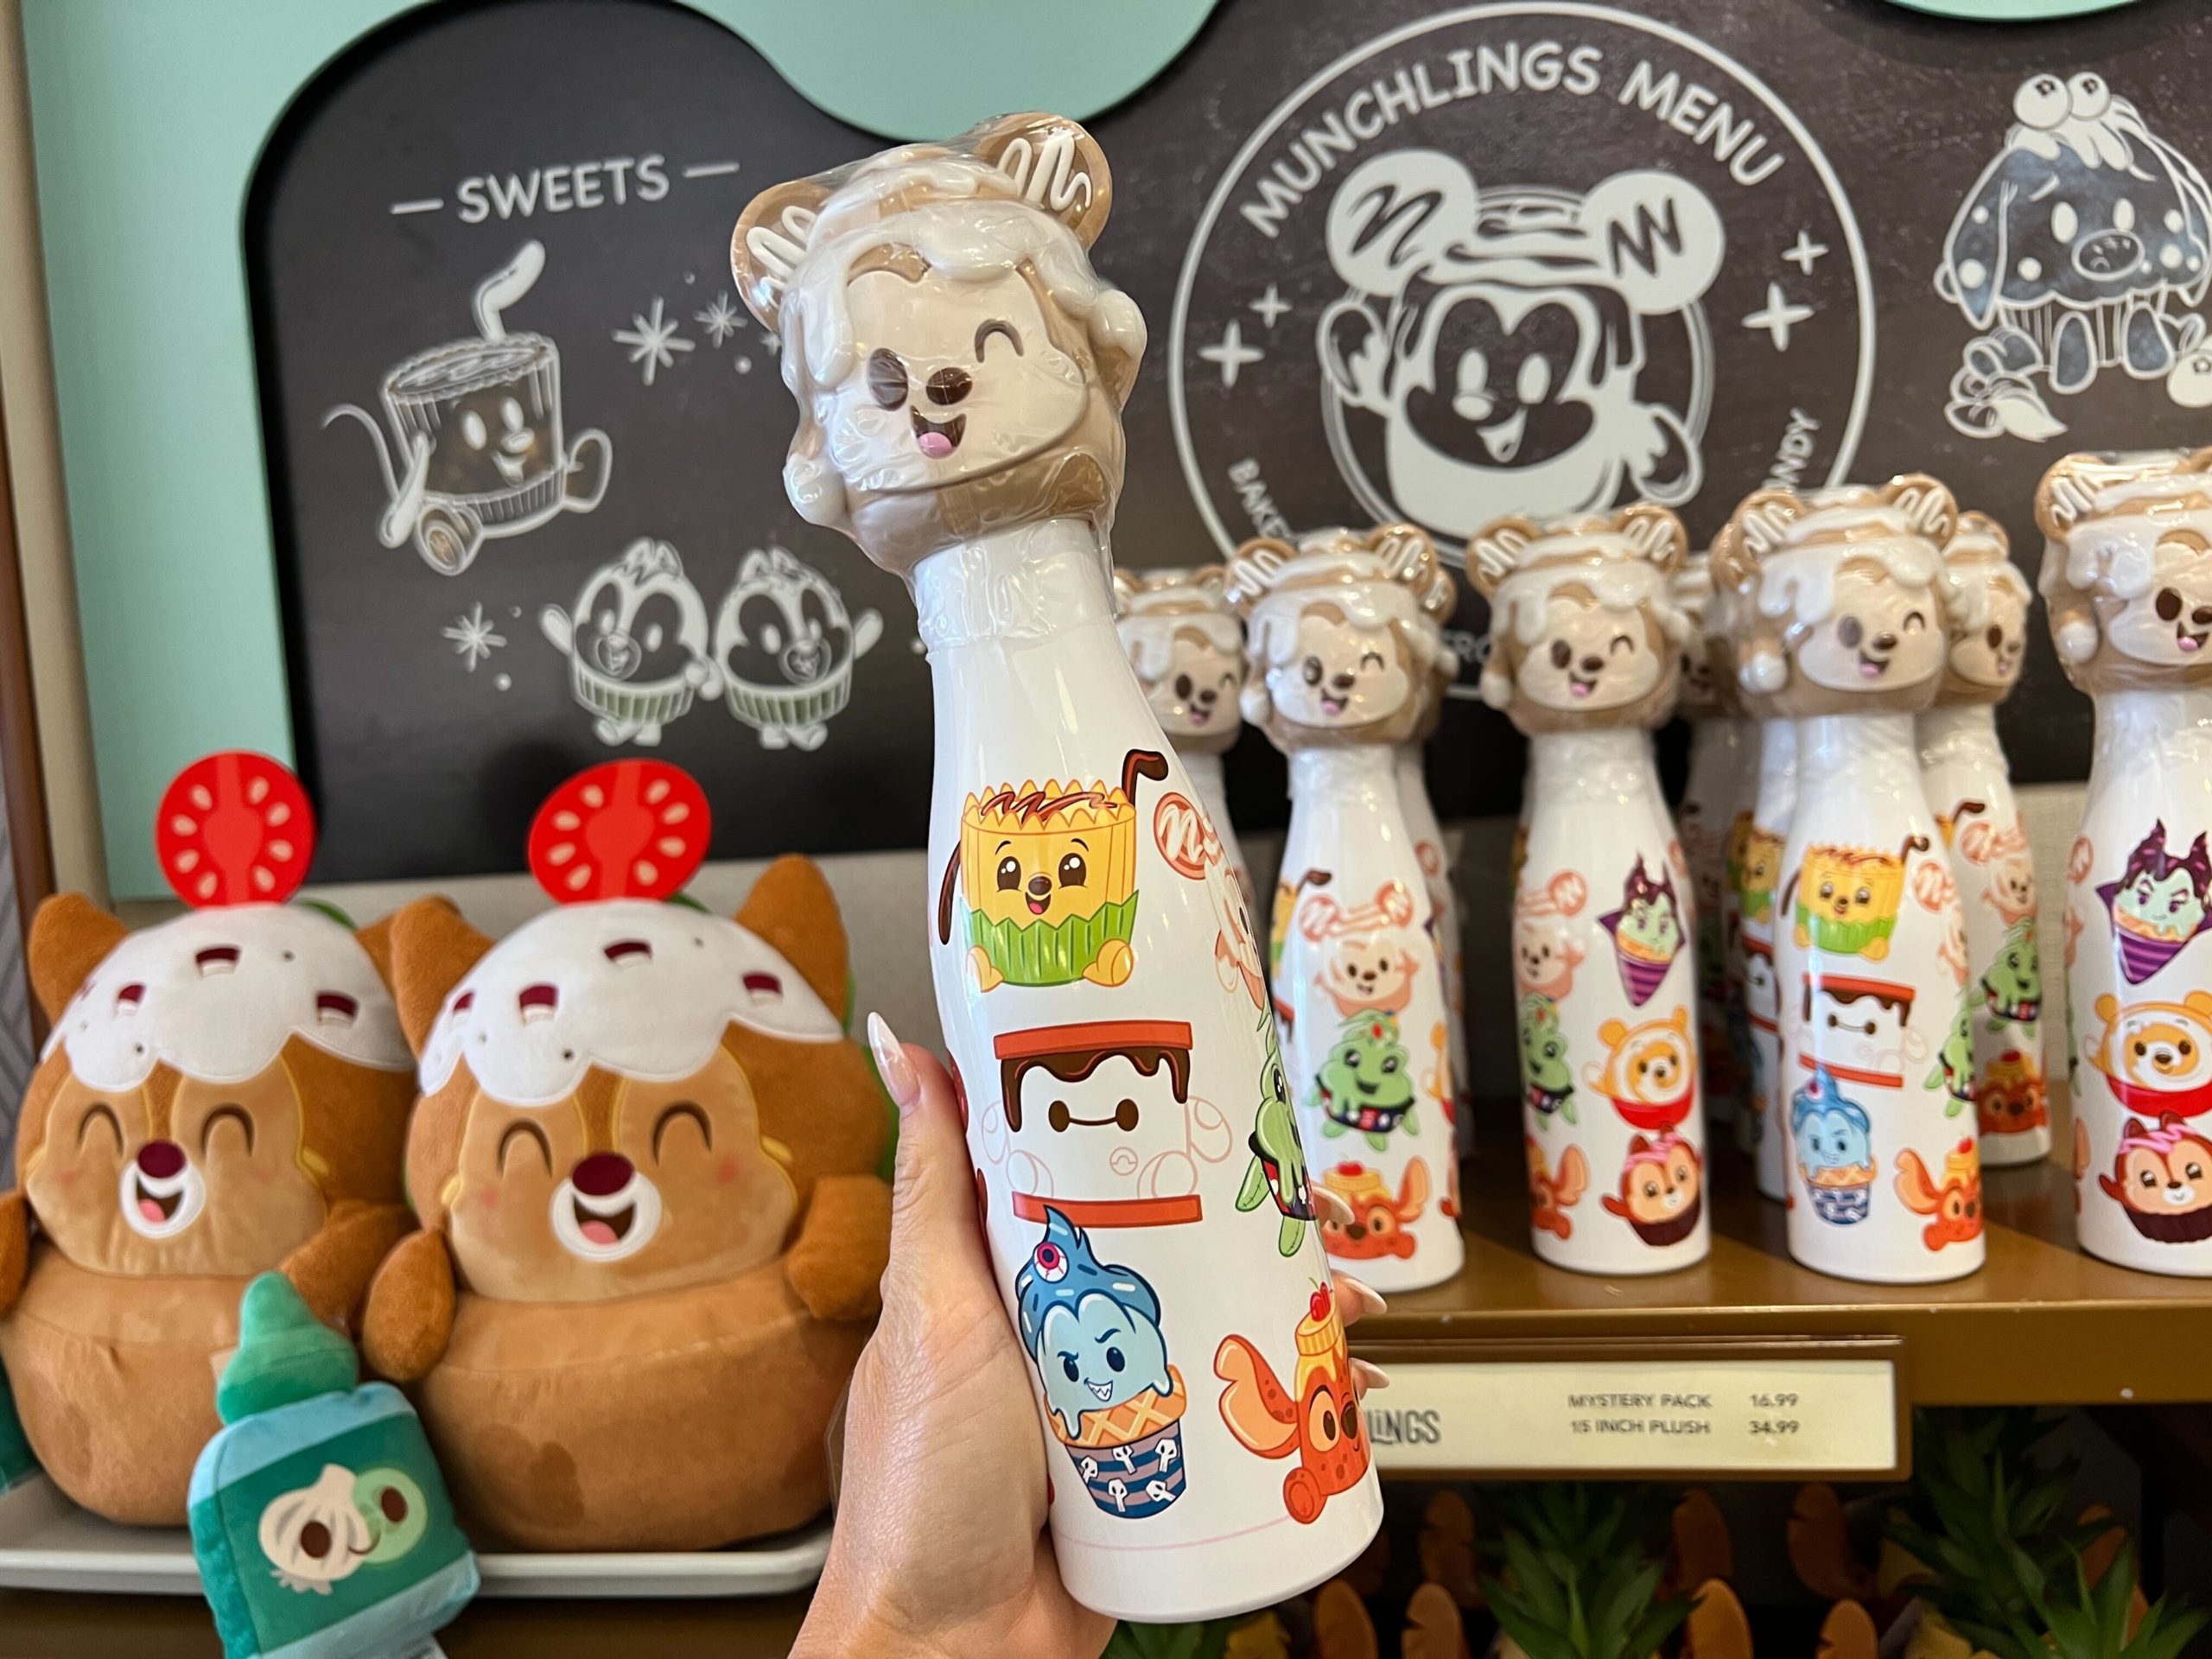 Disney Store Disney Munchlings Water Bottle and Topper